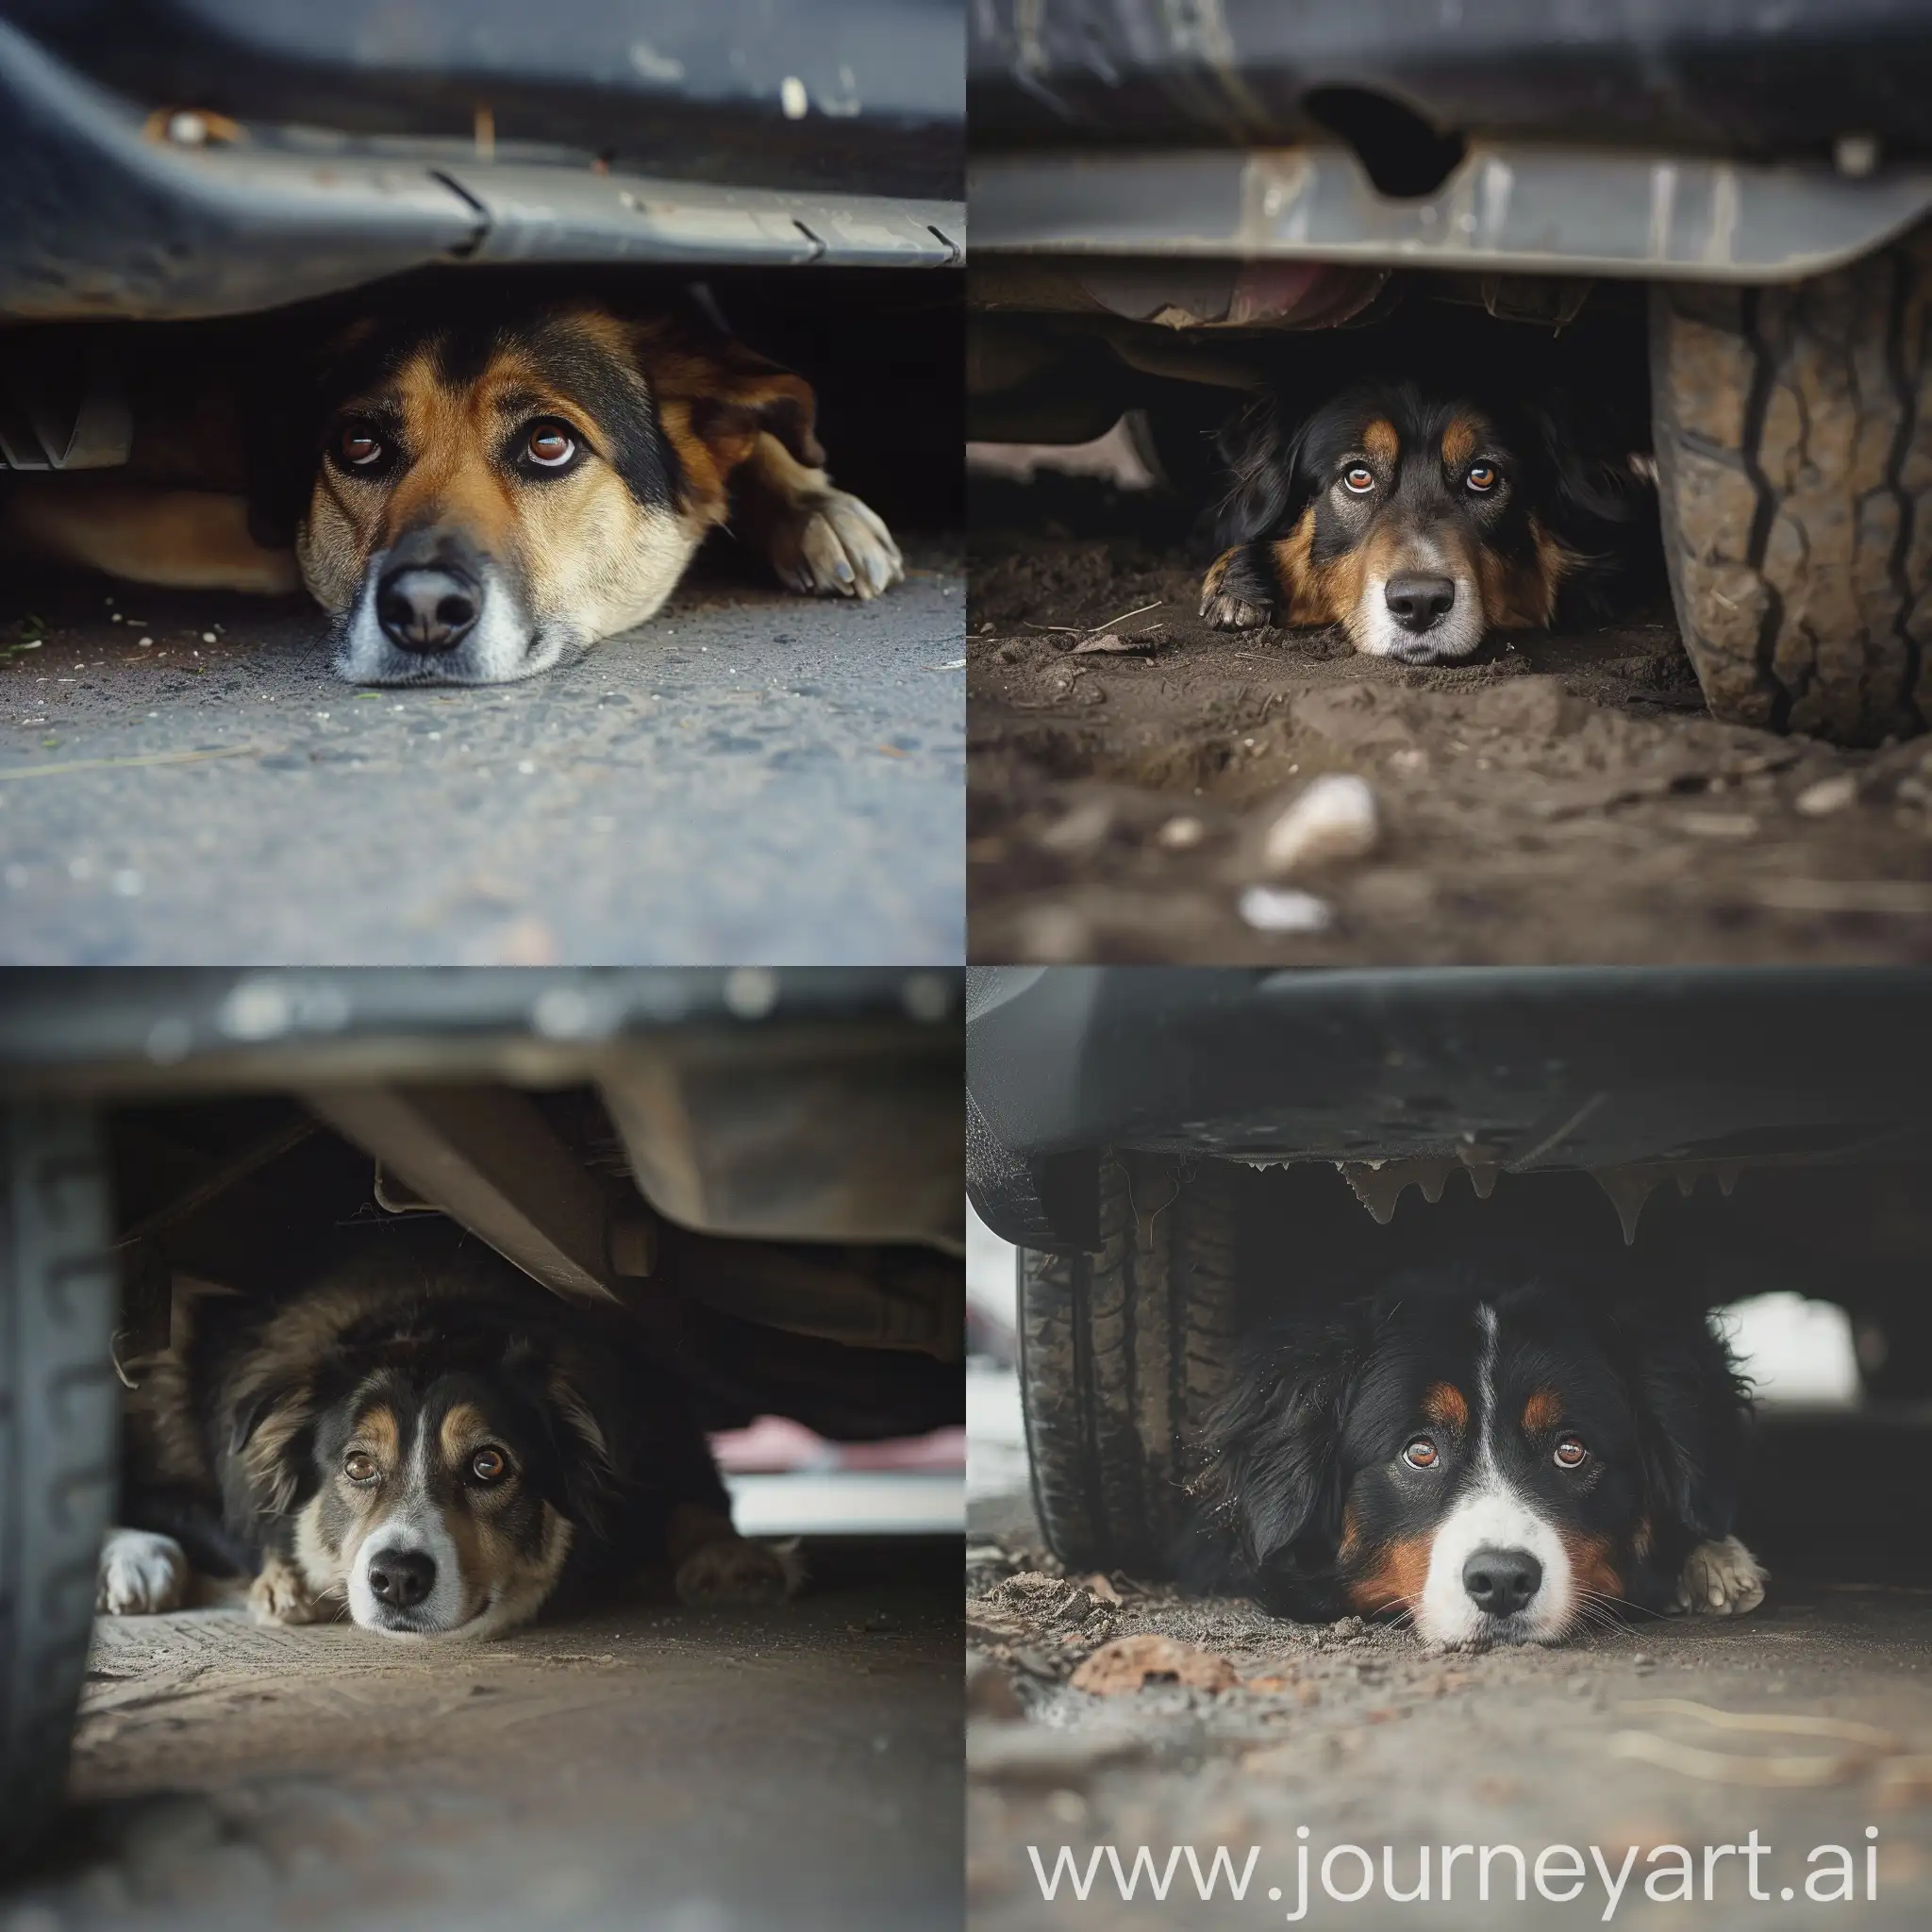 a dog under a car

